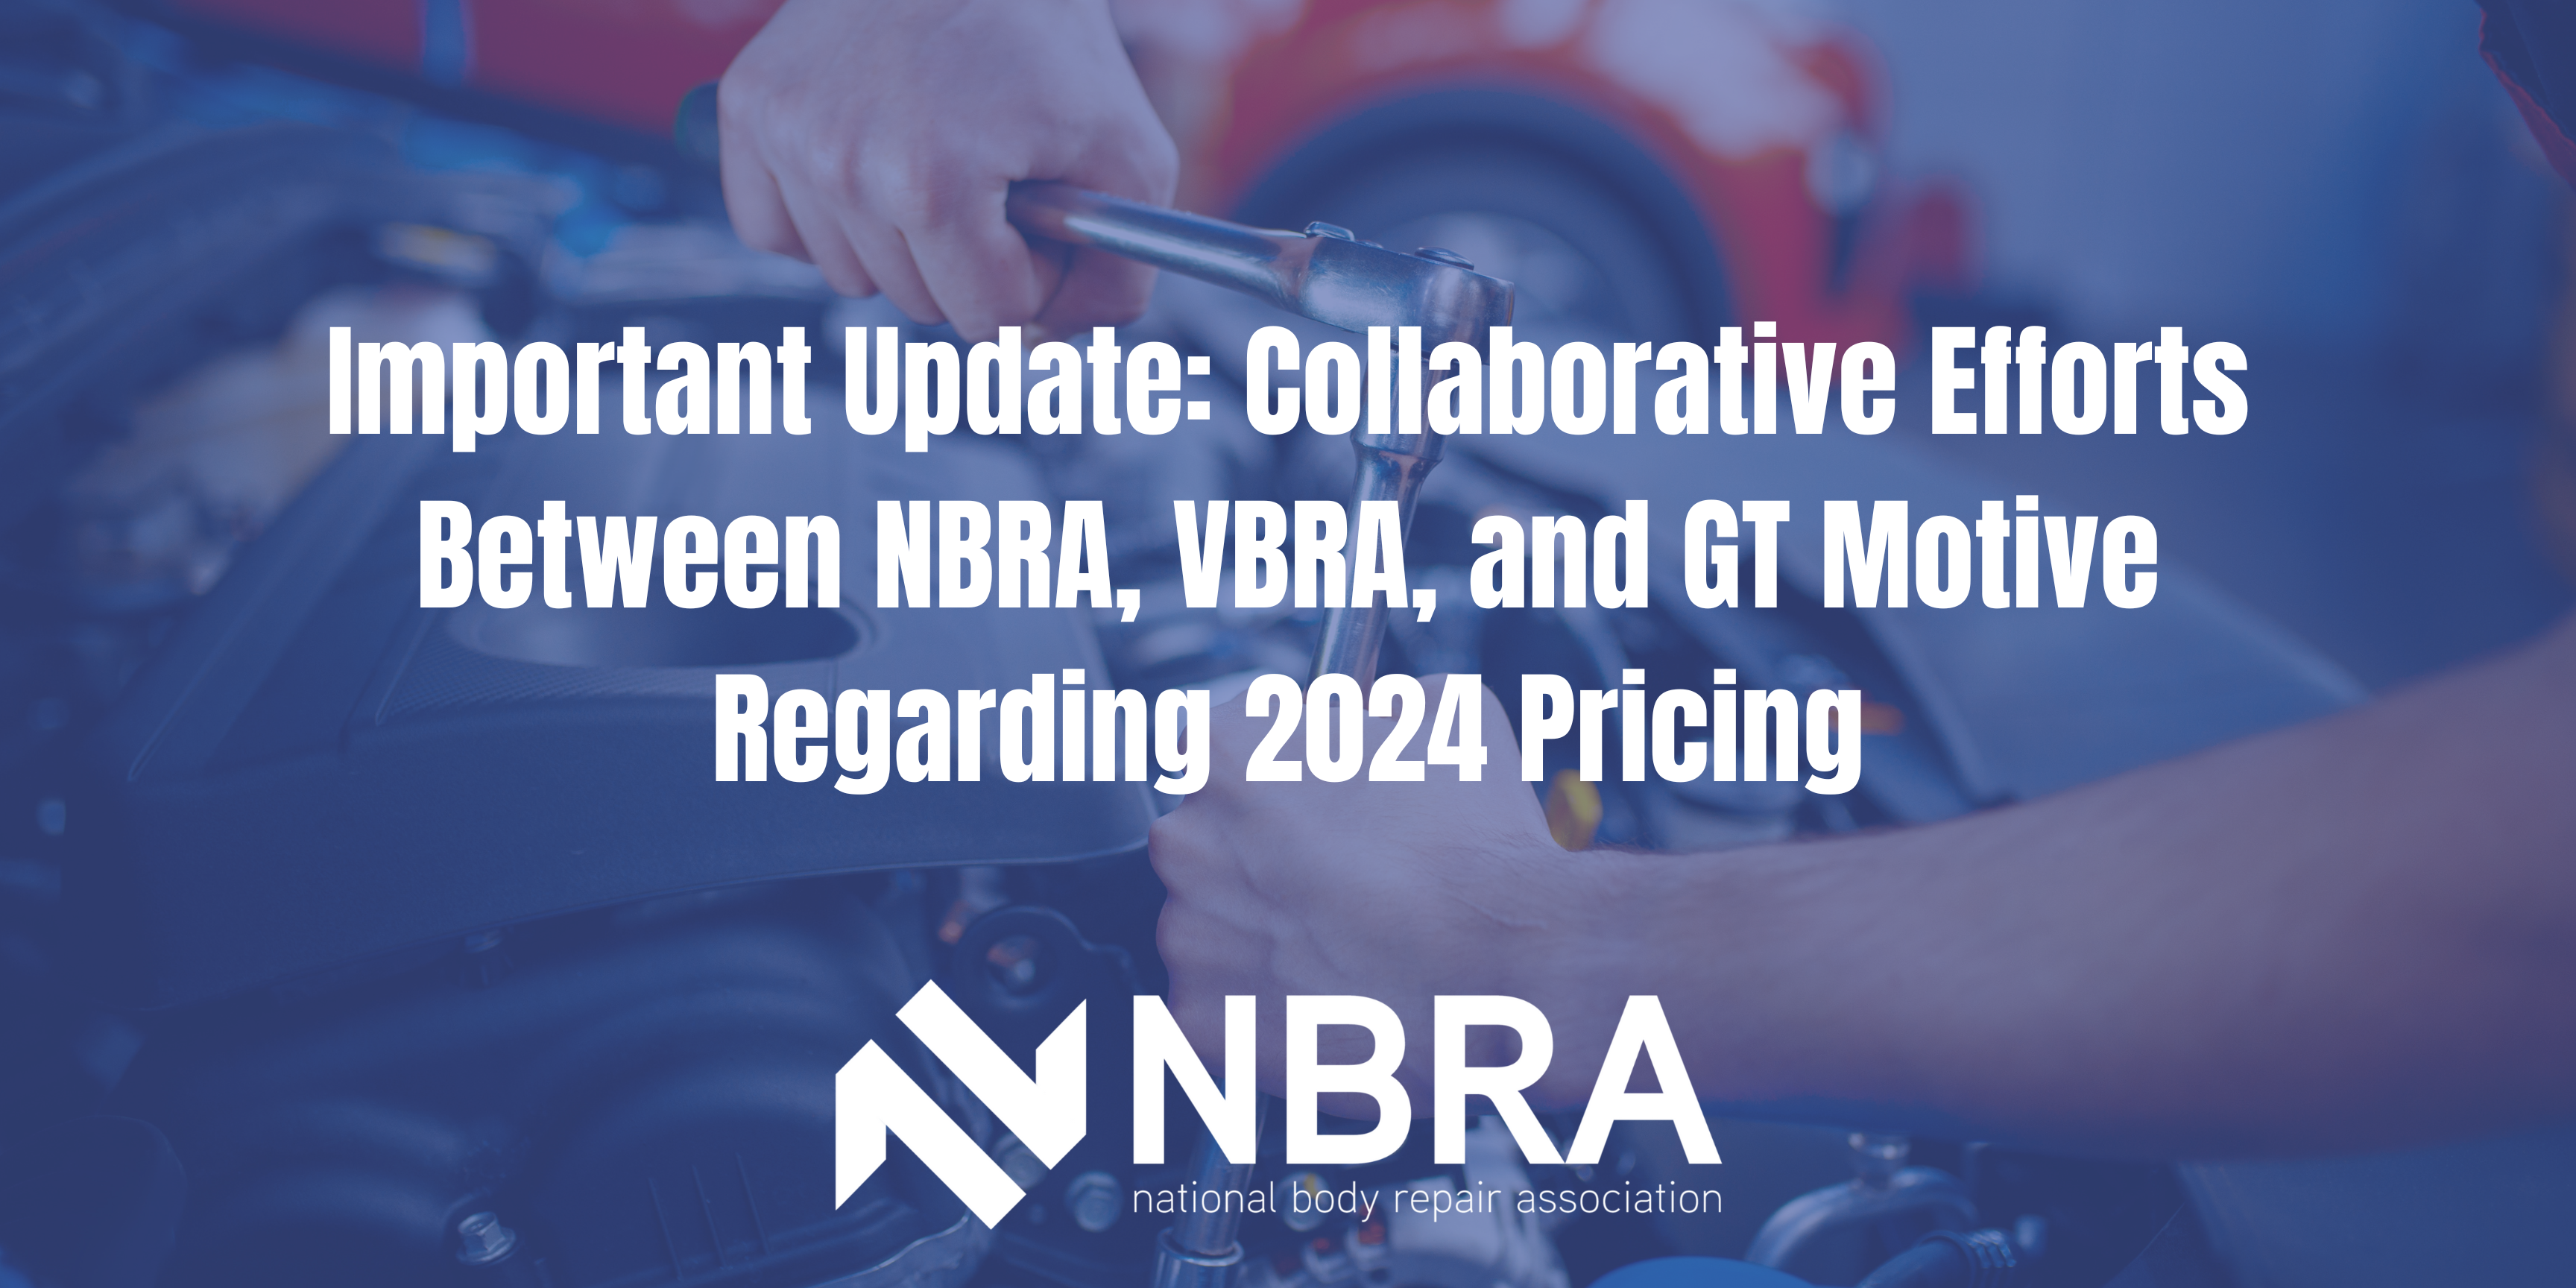 Important Update: Collaborative Efforts Between NBRA, VBRA, and GT Motive Regarding 2024 Pricing